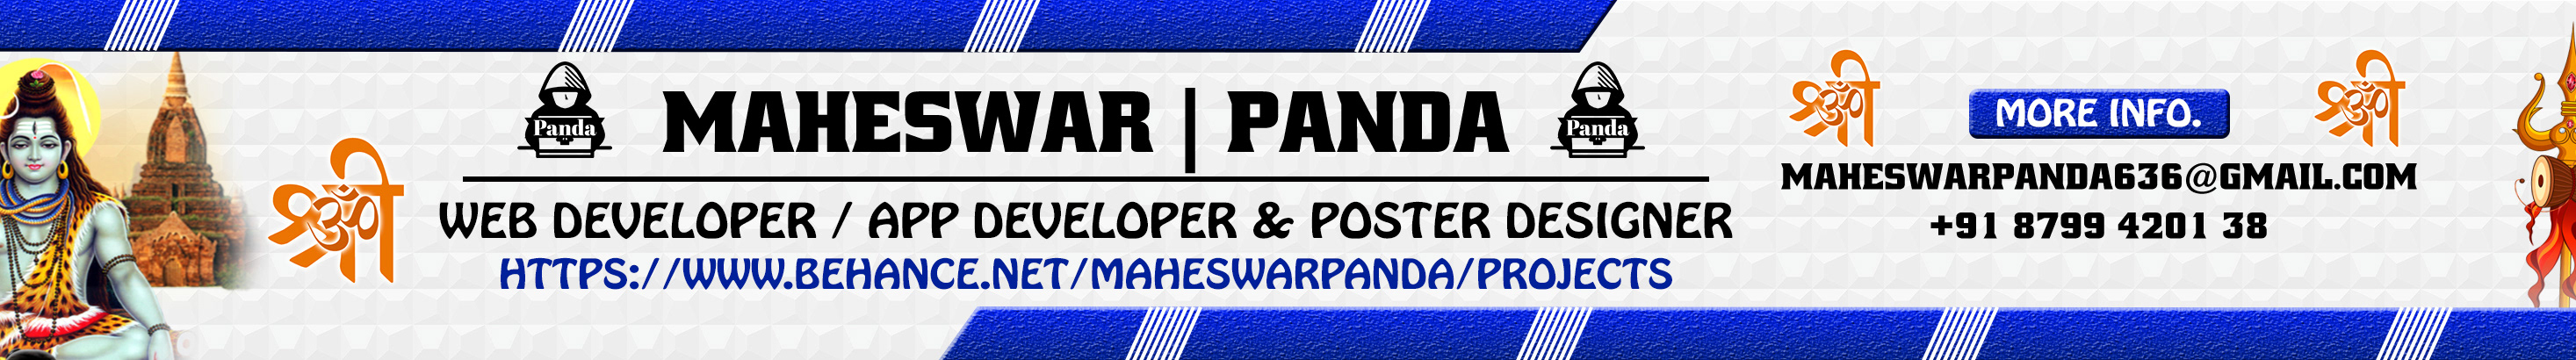 Maheswar Pandas profilbanner